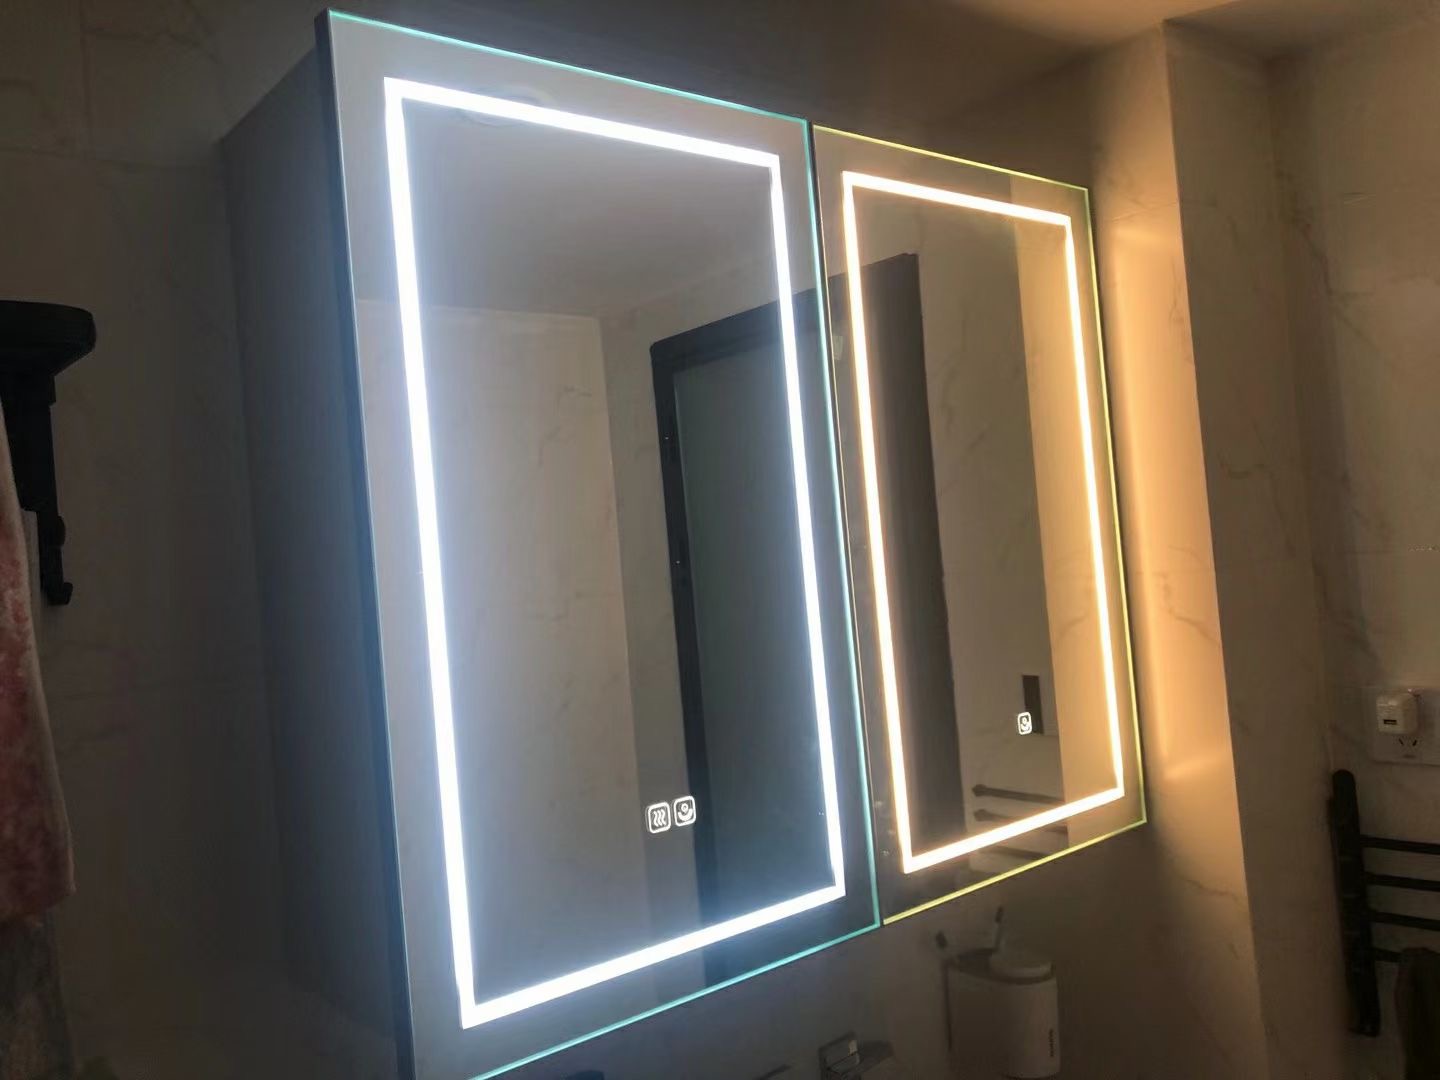 Ukwethulwa kwe-Smart Bathroom Mirror